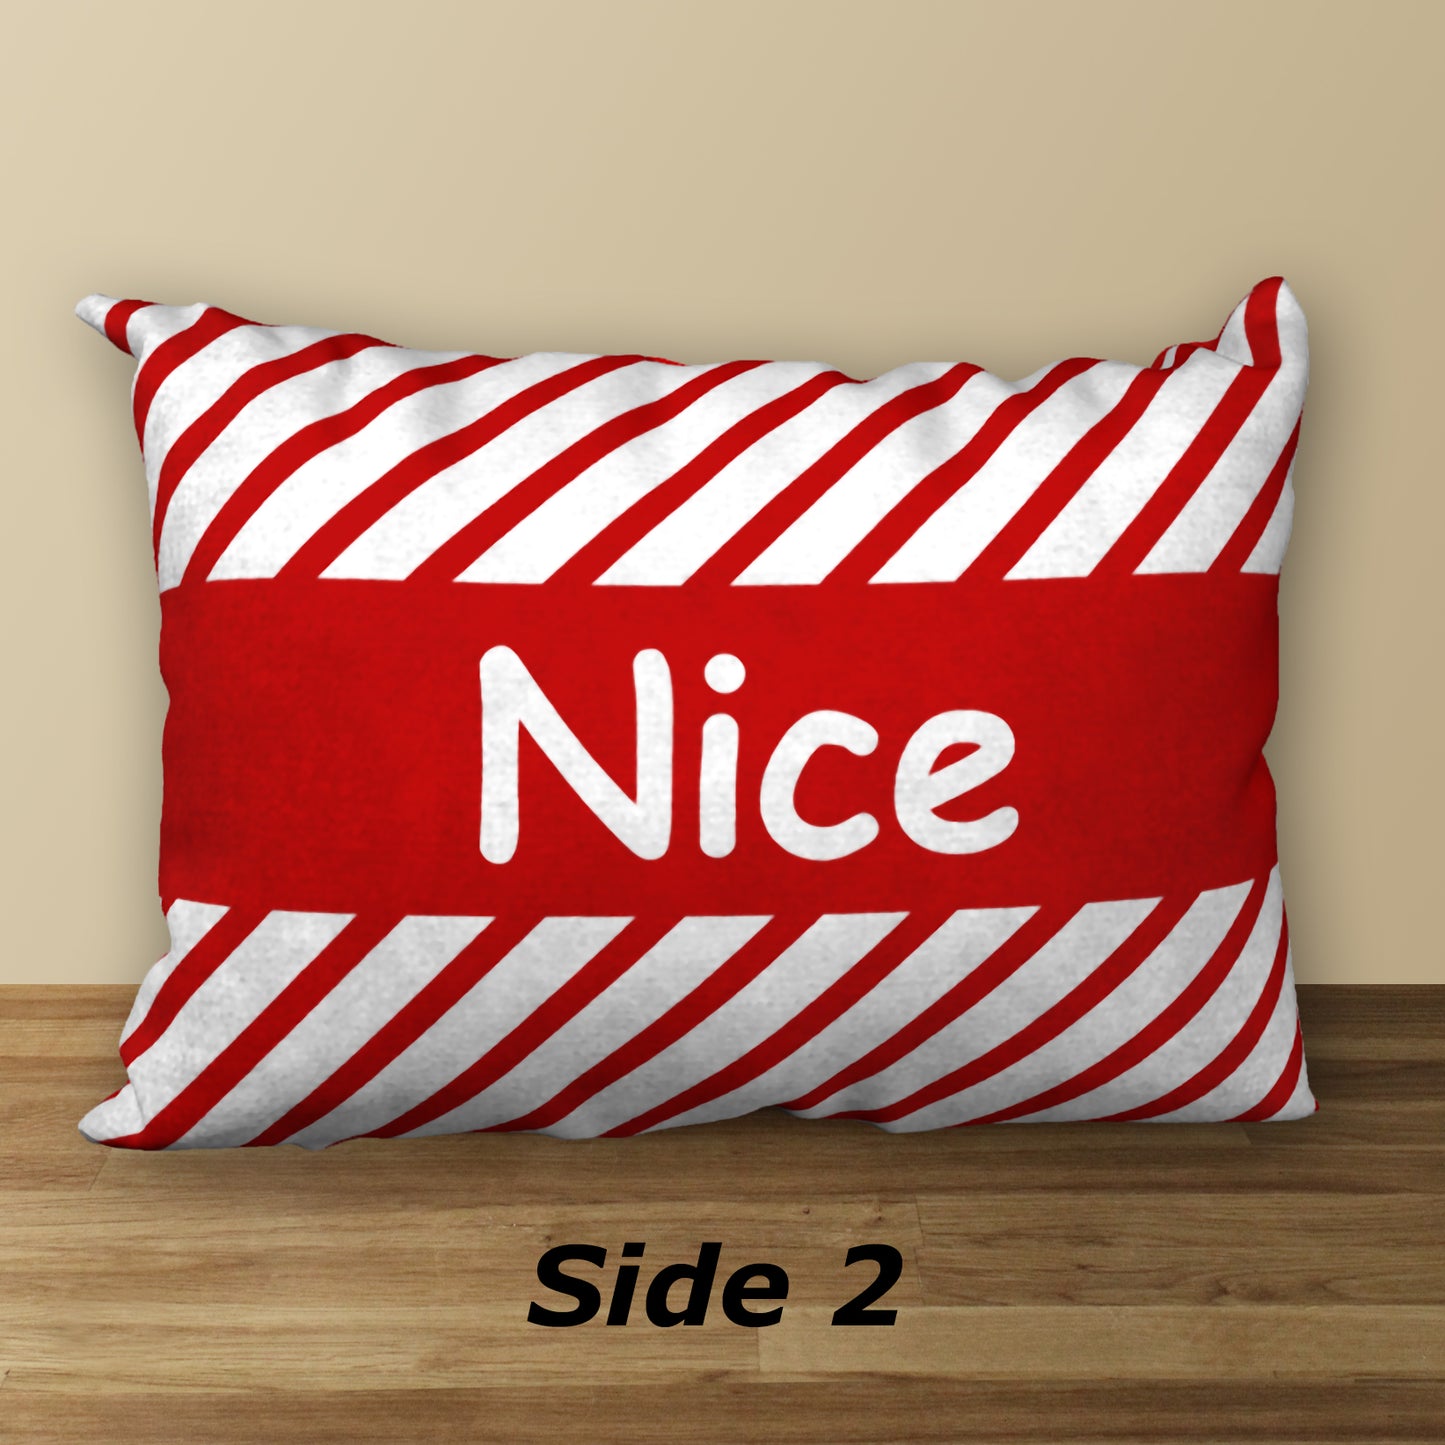 NAUGHTY or NICE Designer Holiday Pillow, 20"x14"